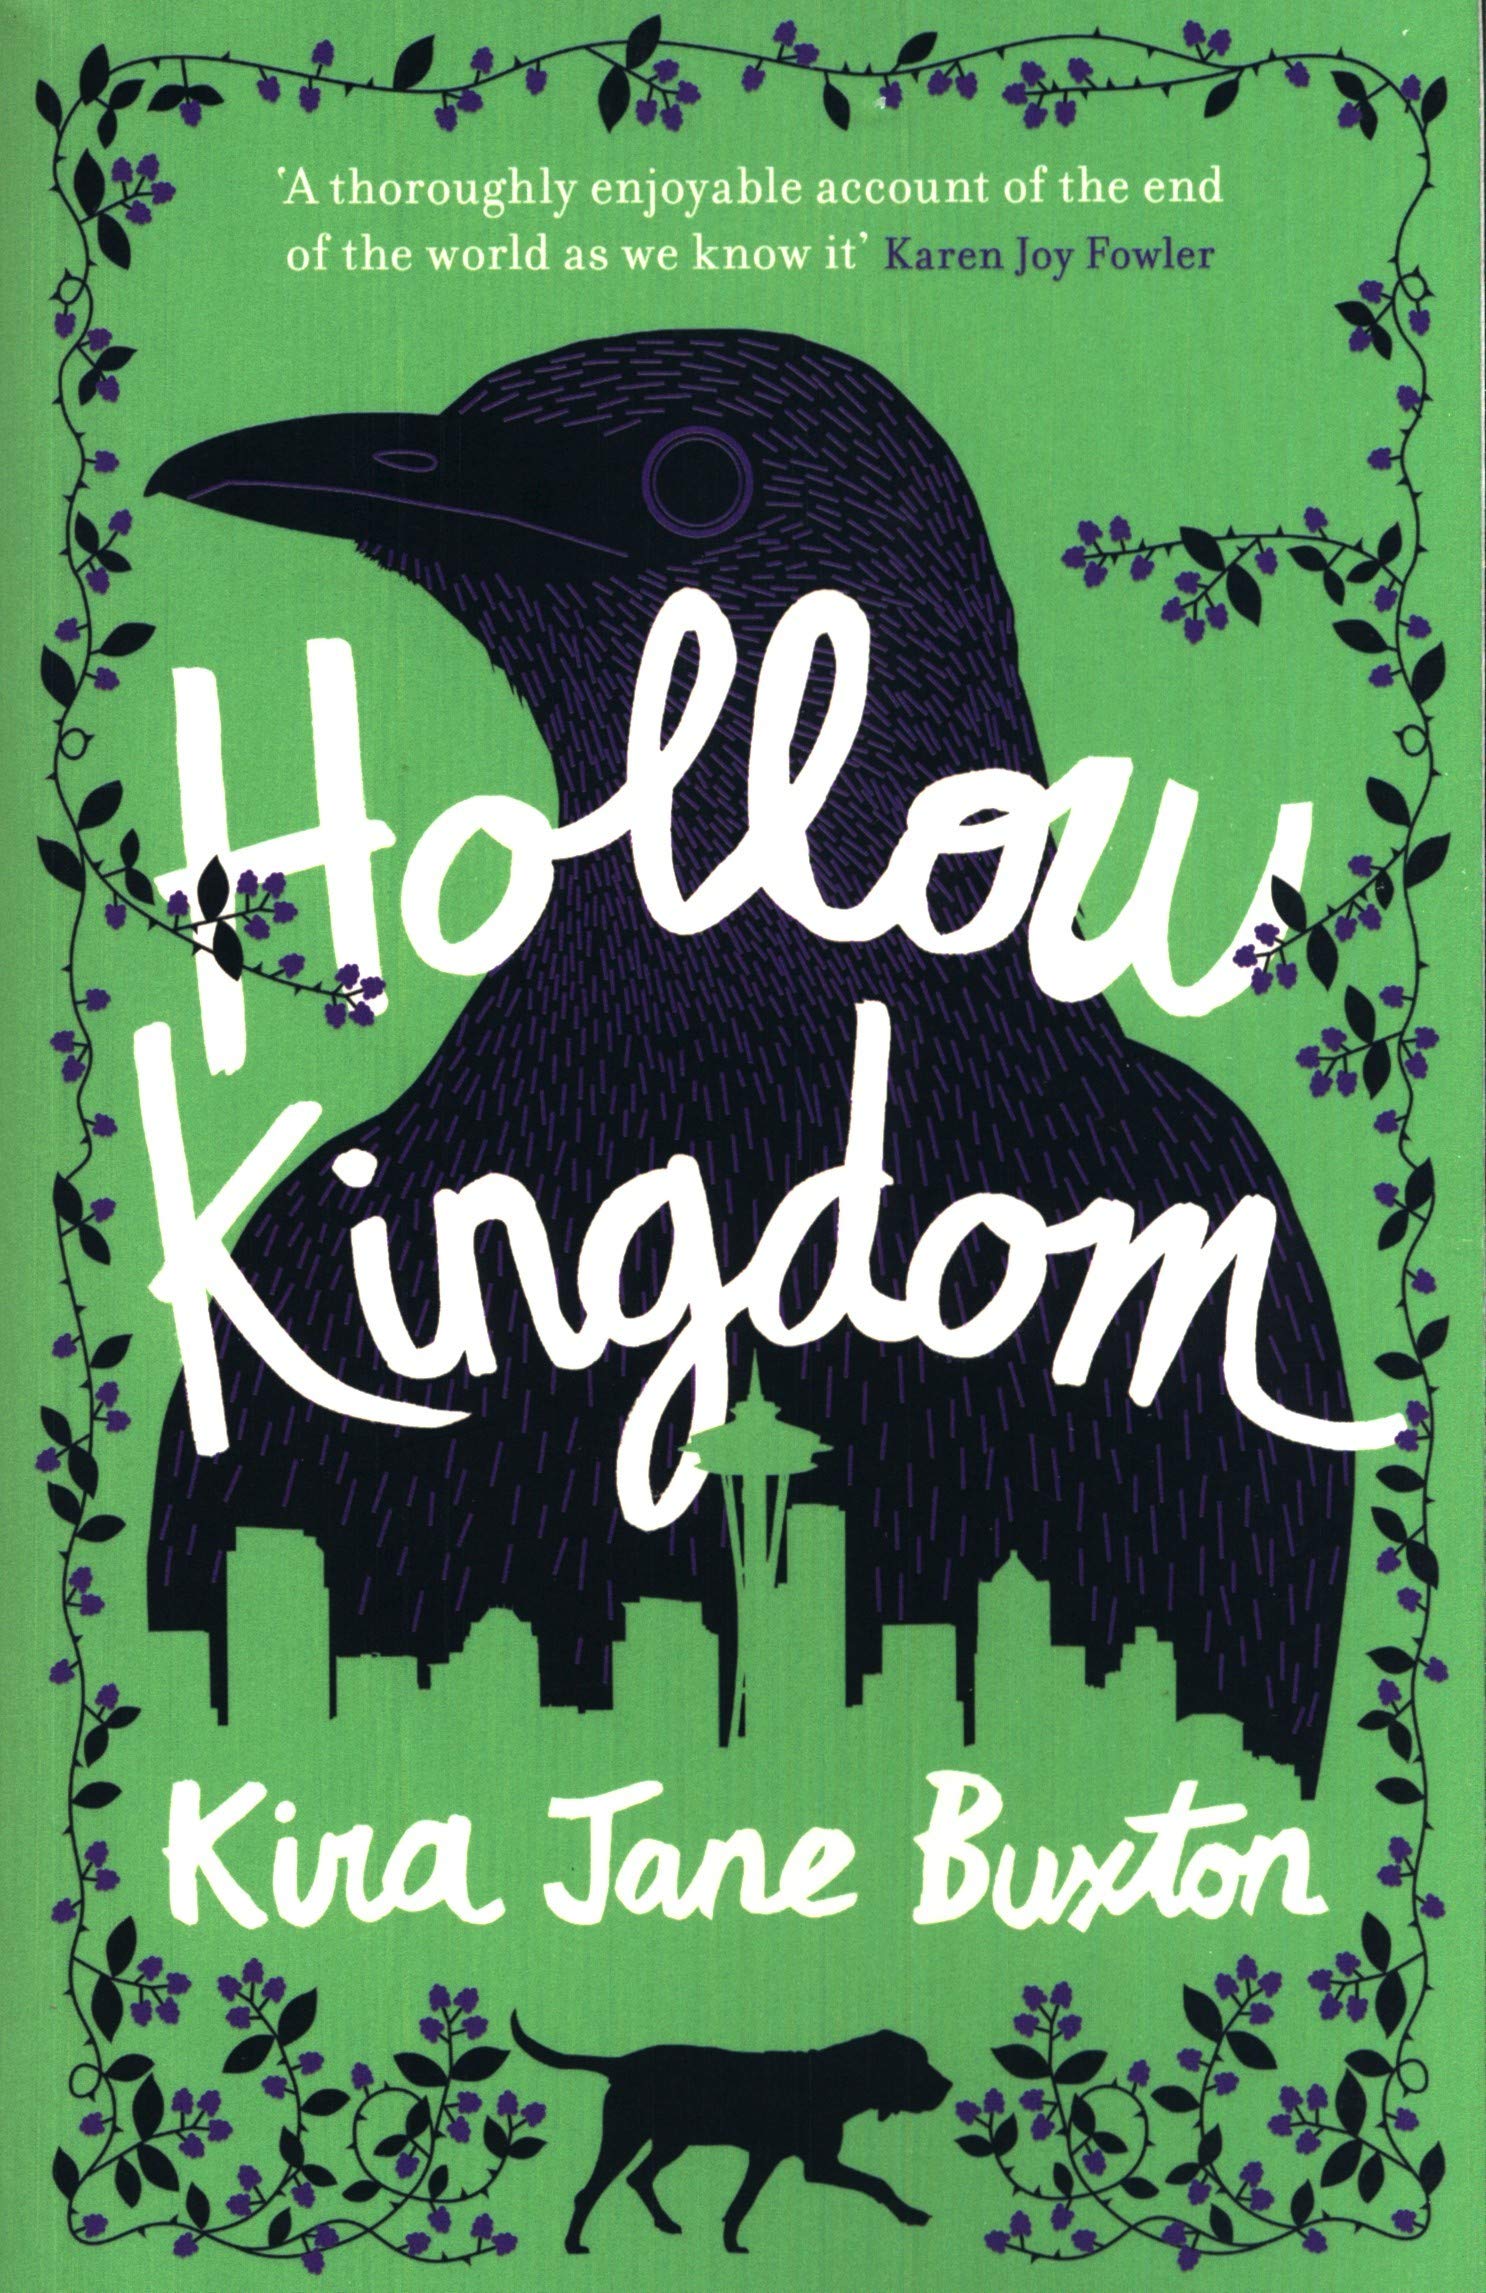 Hollow Kingdom | Kira Jane Buxton image0